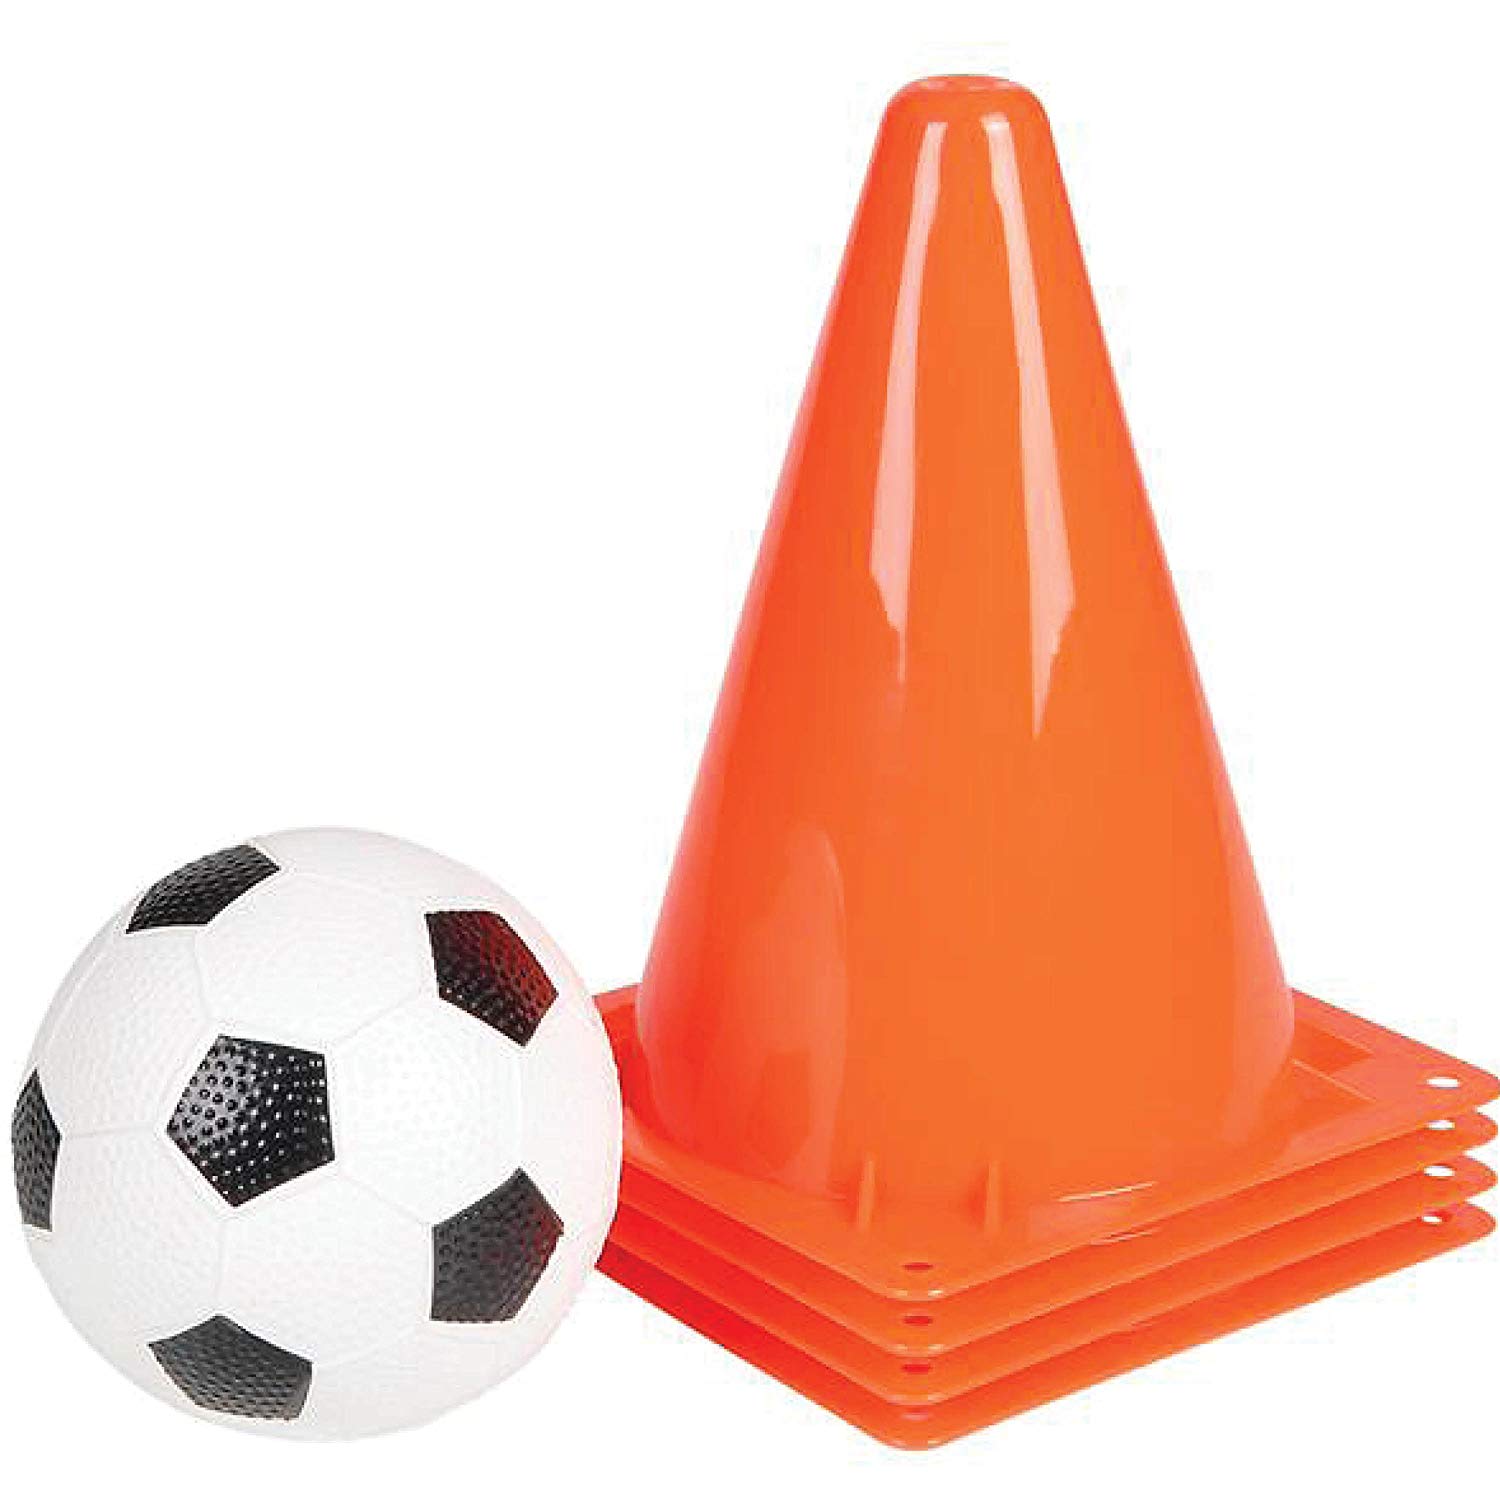 Soccer Disc Cones